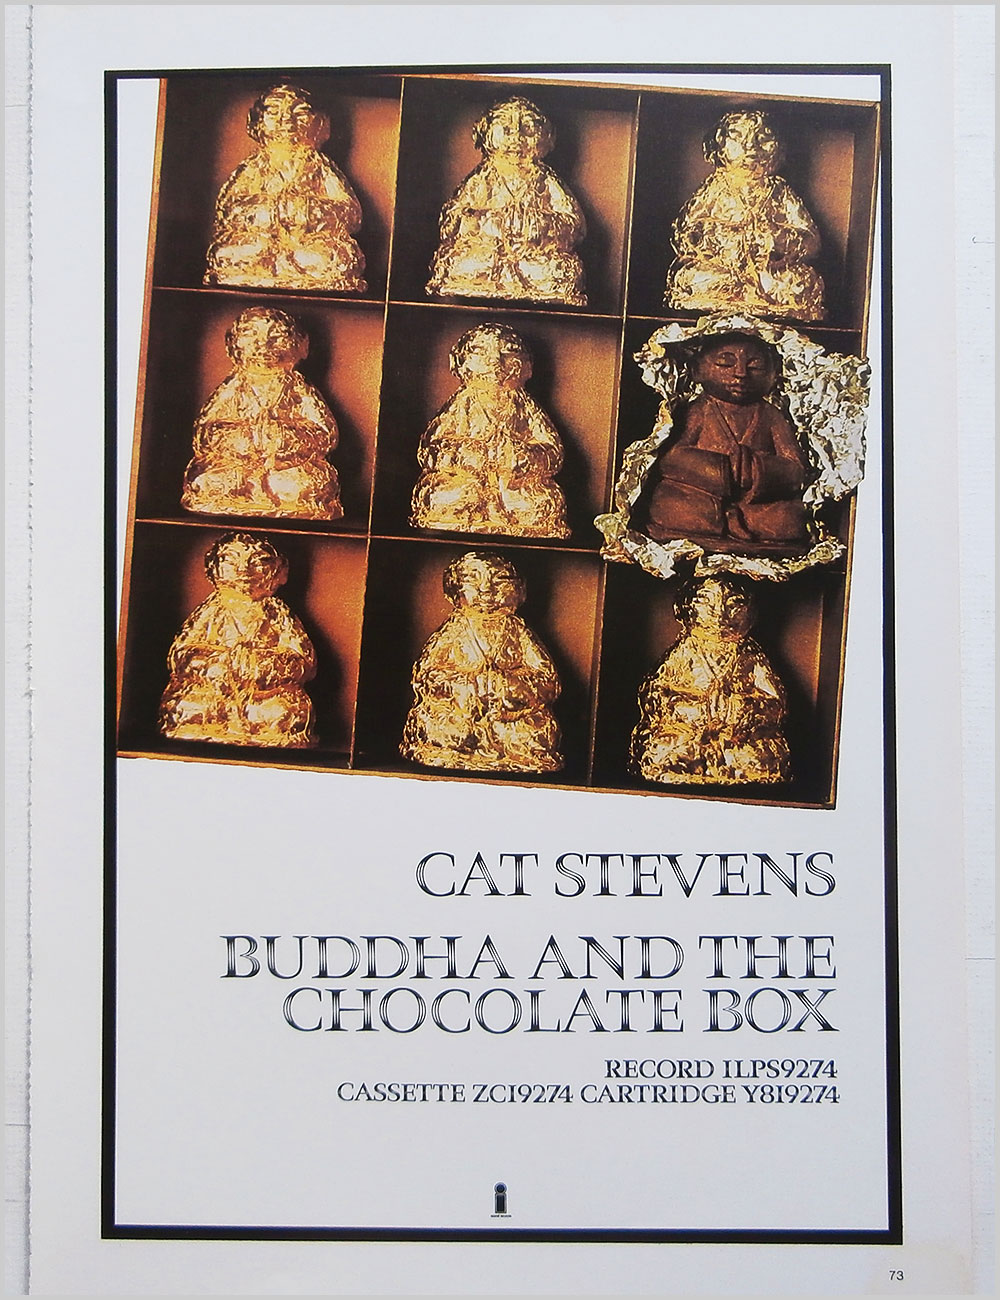 Mahavishnu Orchestra and Cat Stevens - Rock Poster: Mahavishnu Orchestra: Birds of Fire b/w Cat Stevens: Buddha and the Chocolate Box  (PB100308) 